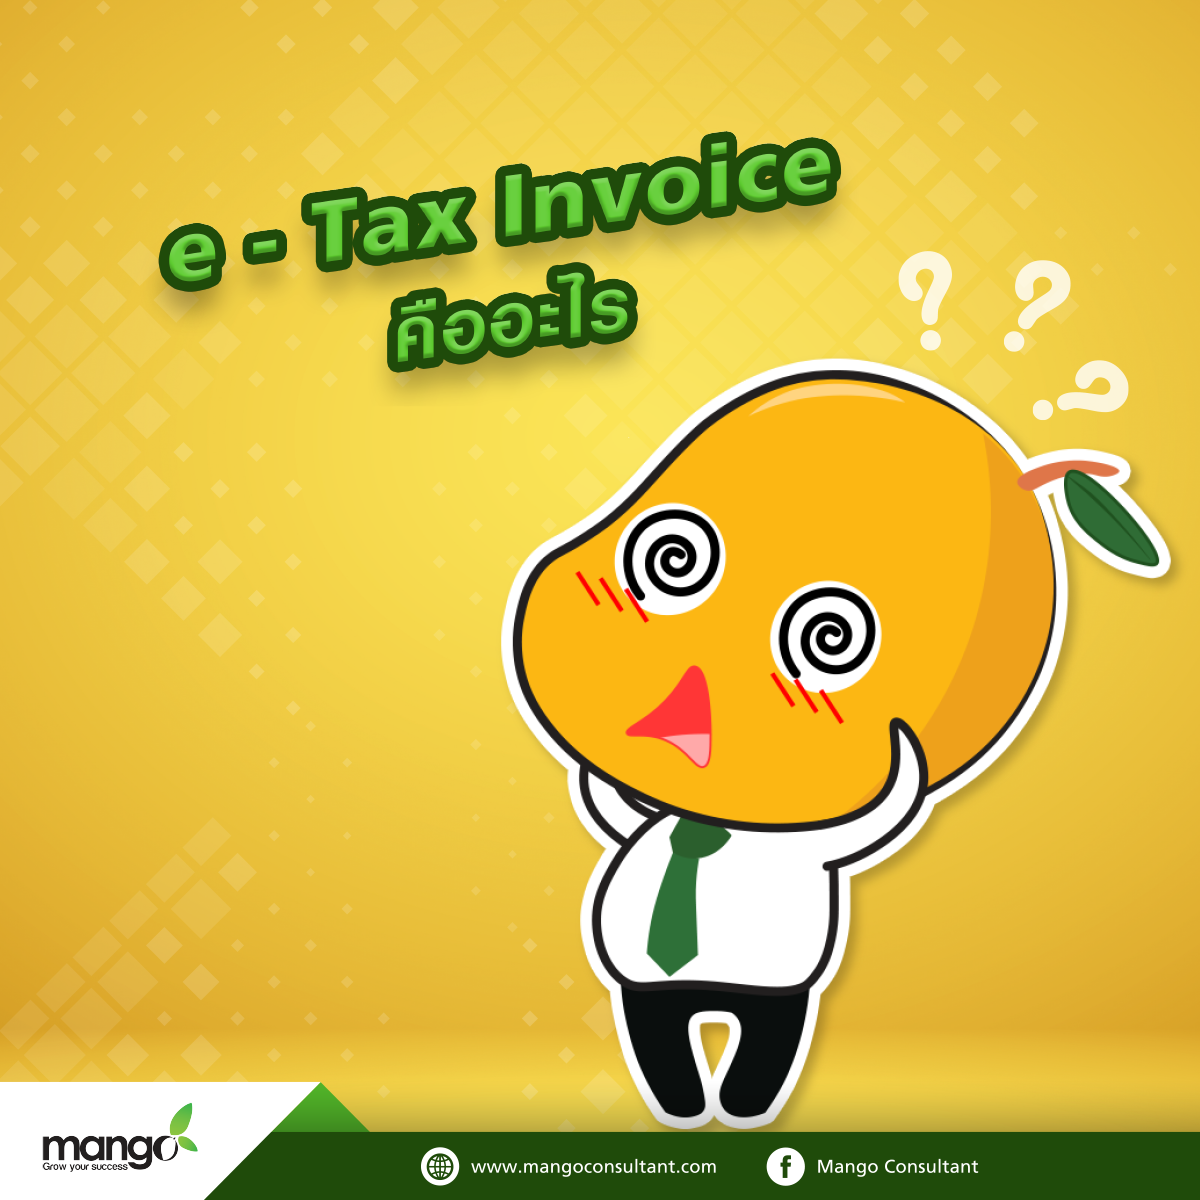 e-tax invoice คืออะไร